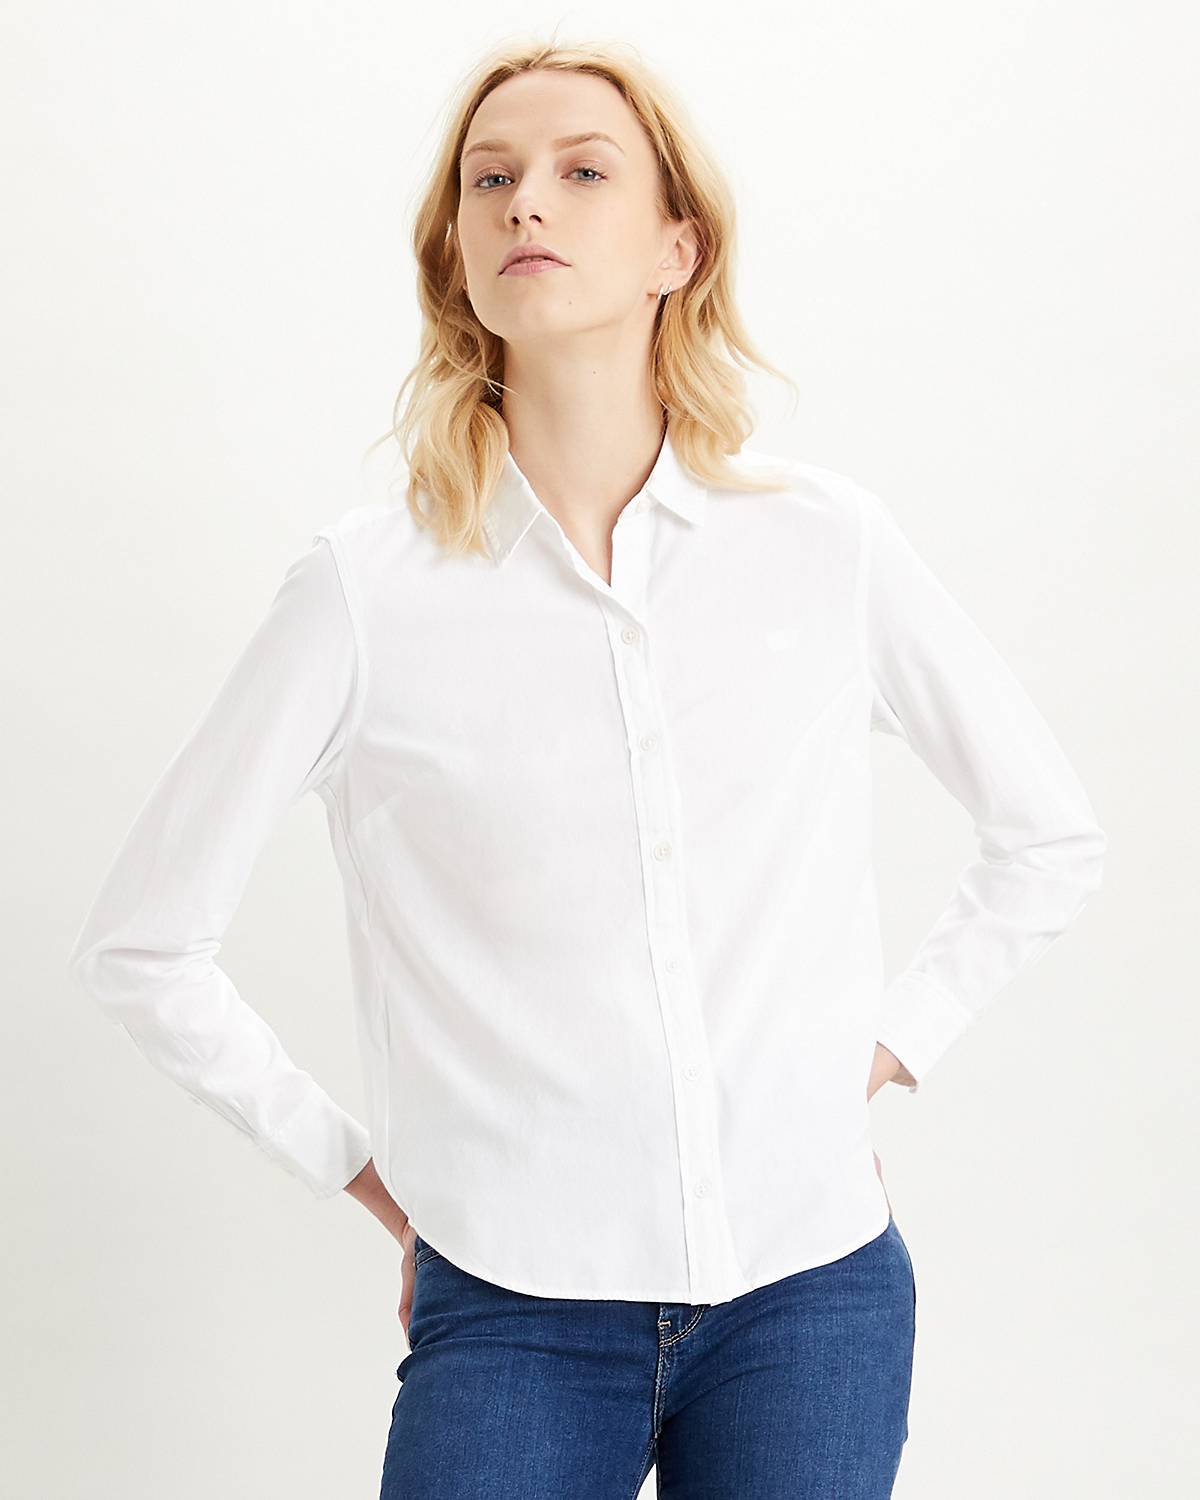 Fall Shirts, Button Down Work Tops for Women Graphic Tee Shirt